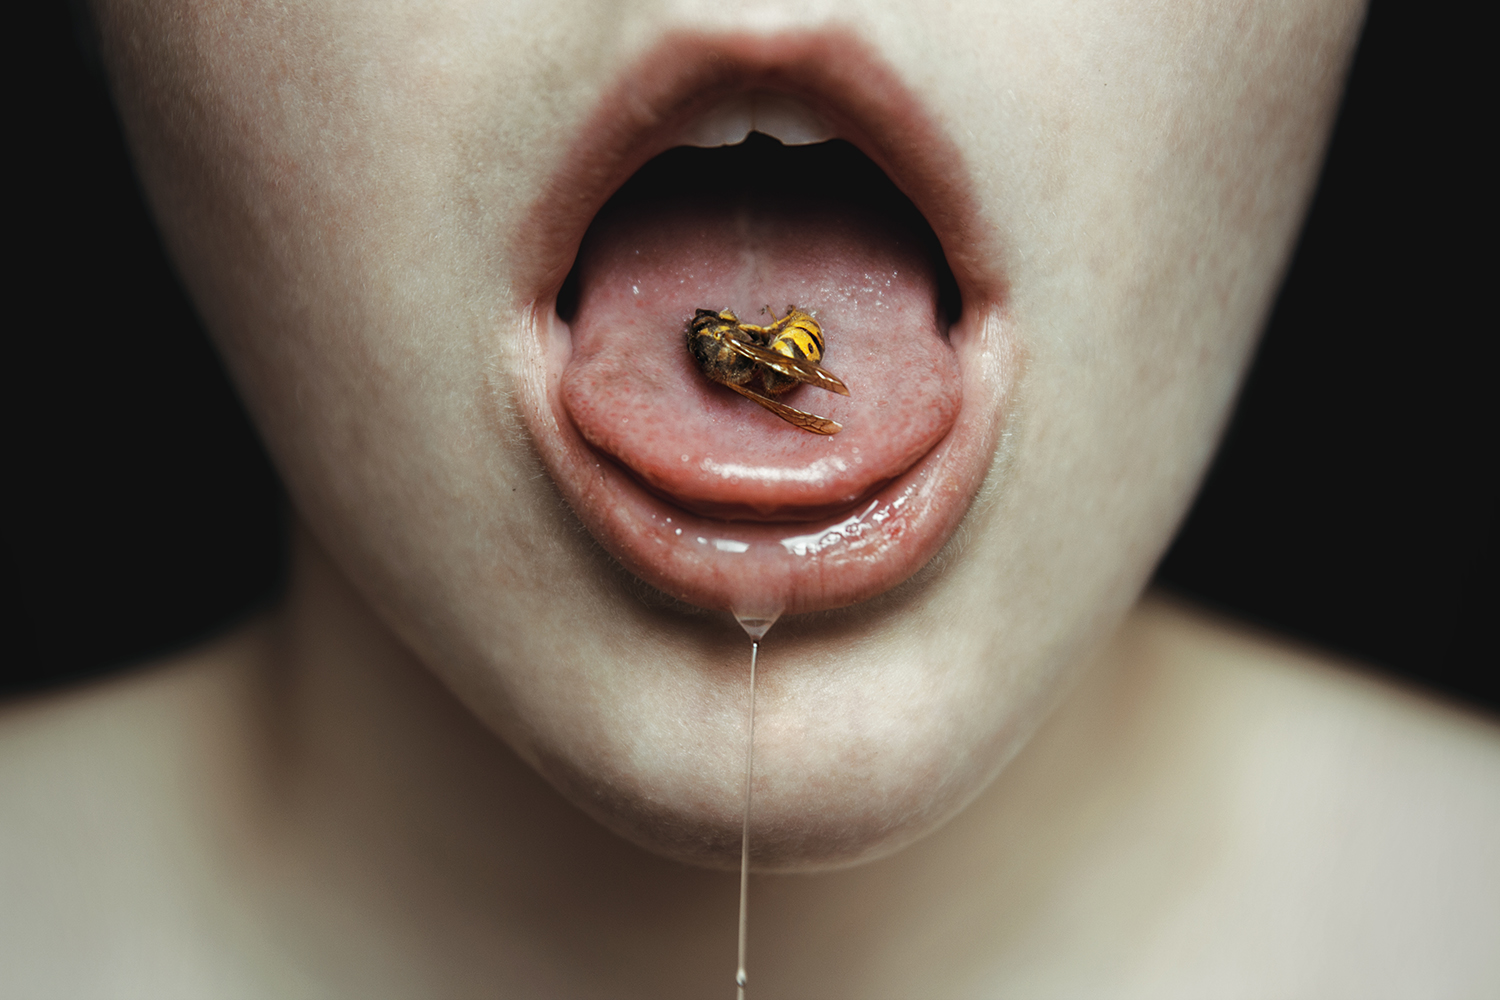 Elena Helfrecht, Emesis - hornet on tongue